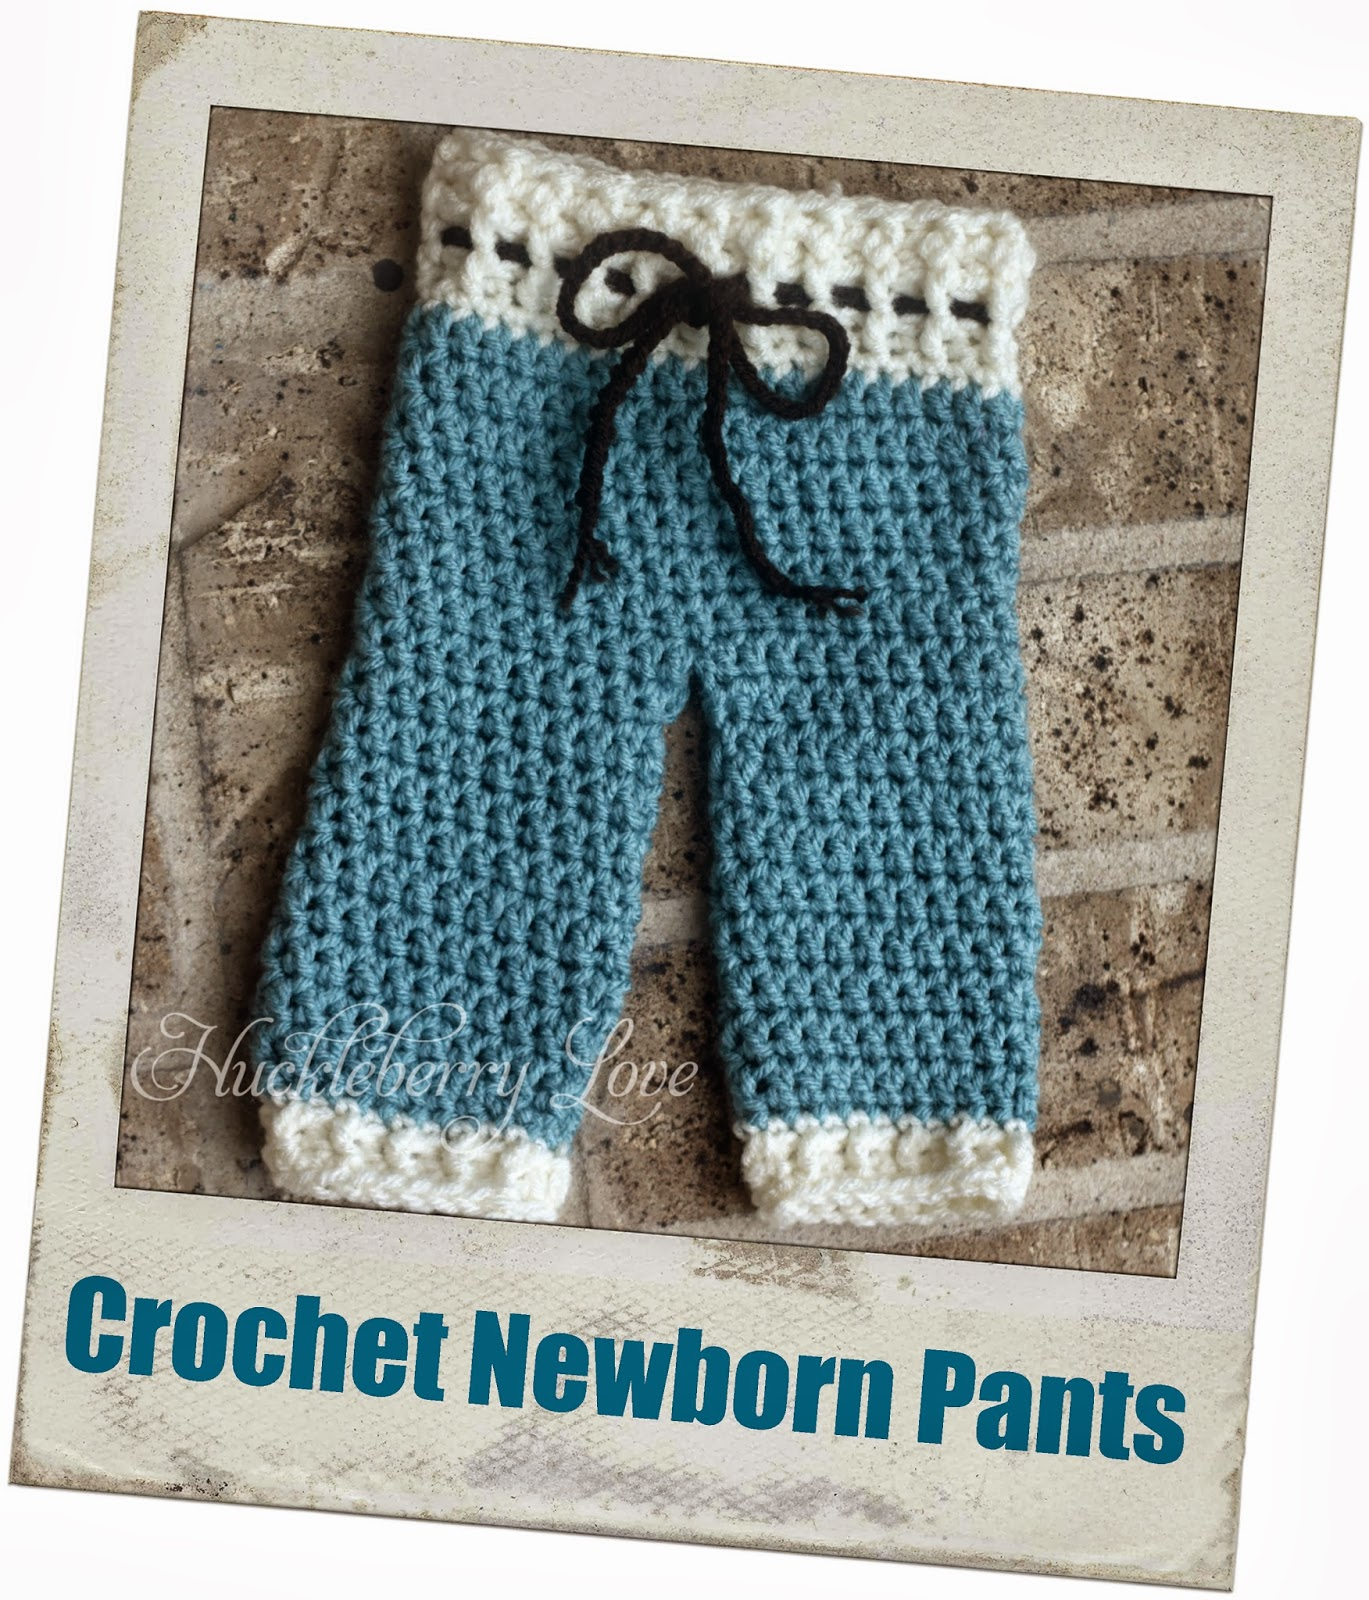 Baby Pants Crochet Pattern Huckleberry Love Crochet Newborn Pants